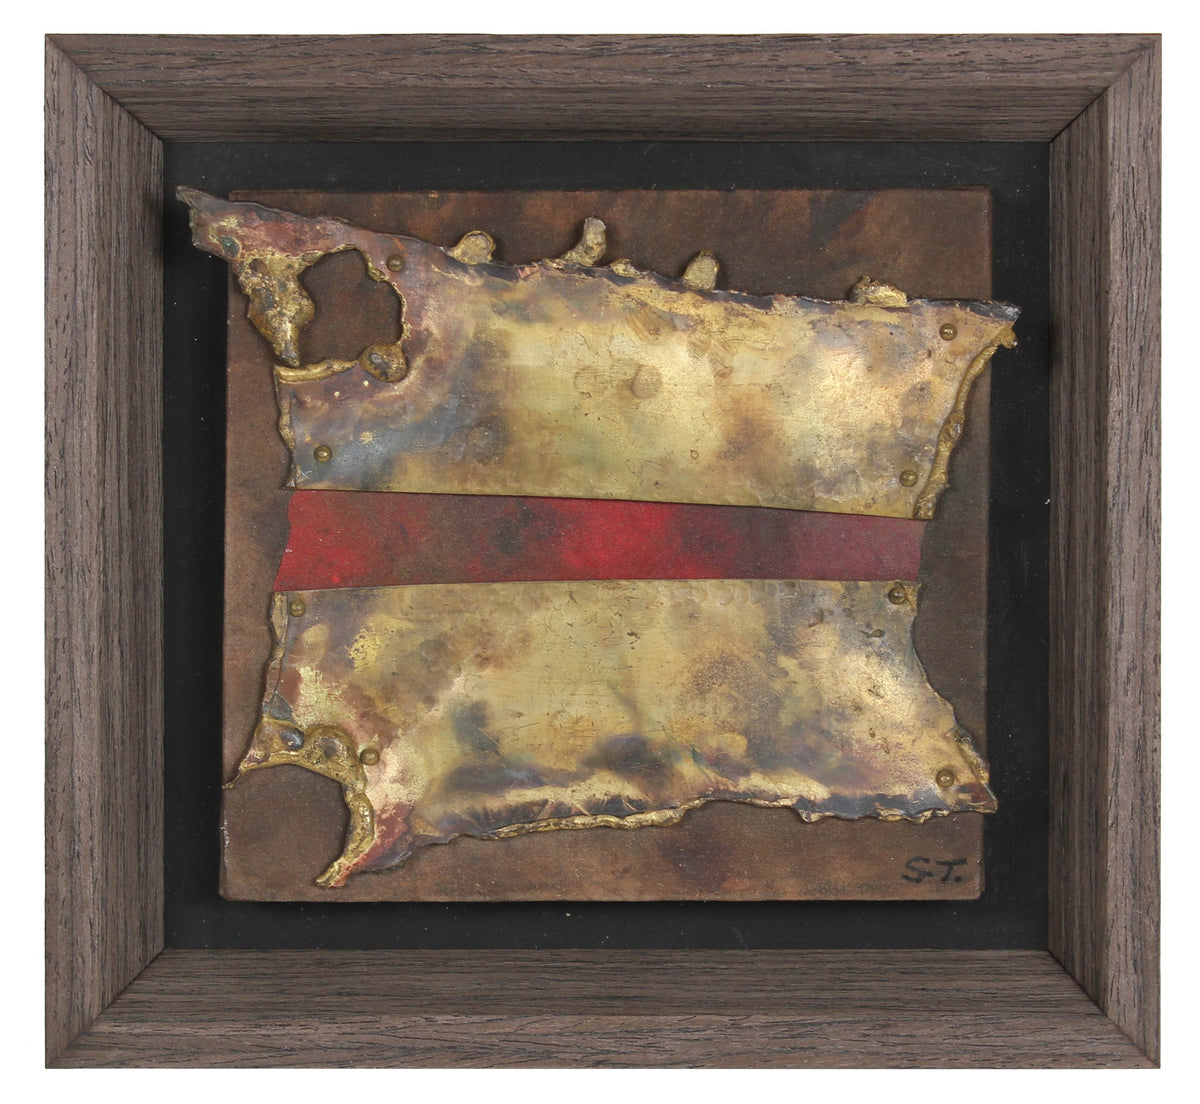 &lt;i&gt;Olé&lt;/i&gt;, 20th Century&lt;br&gt;Bronze, Cloth &amp; Acrylic on Wood Panel&lt;br&gt;&lt;br&gt;#87881